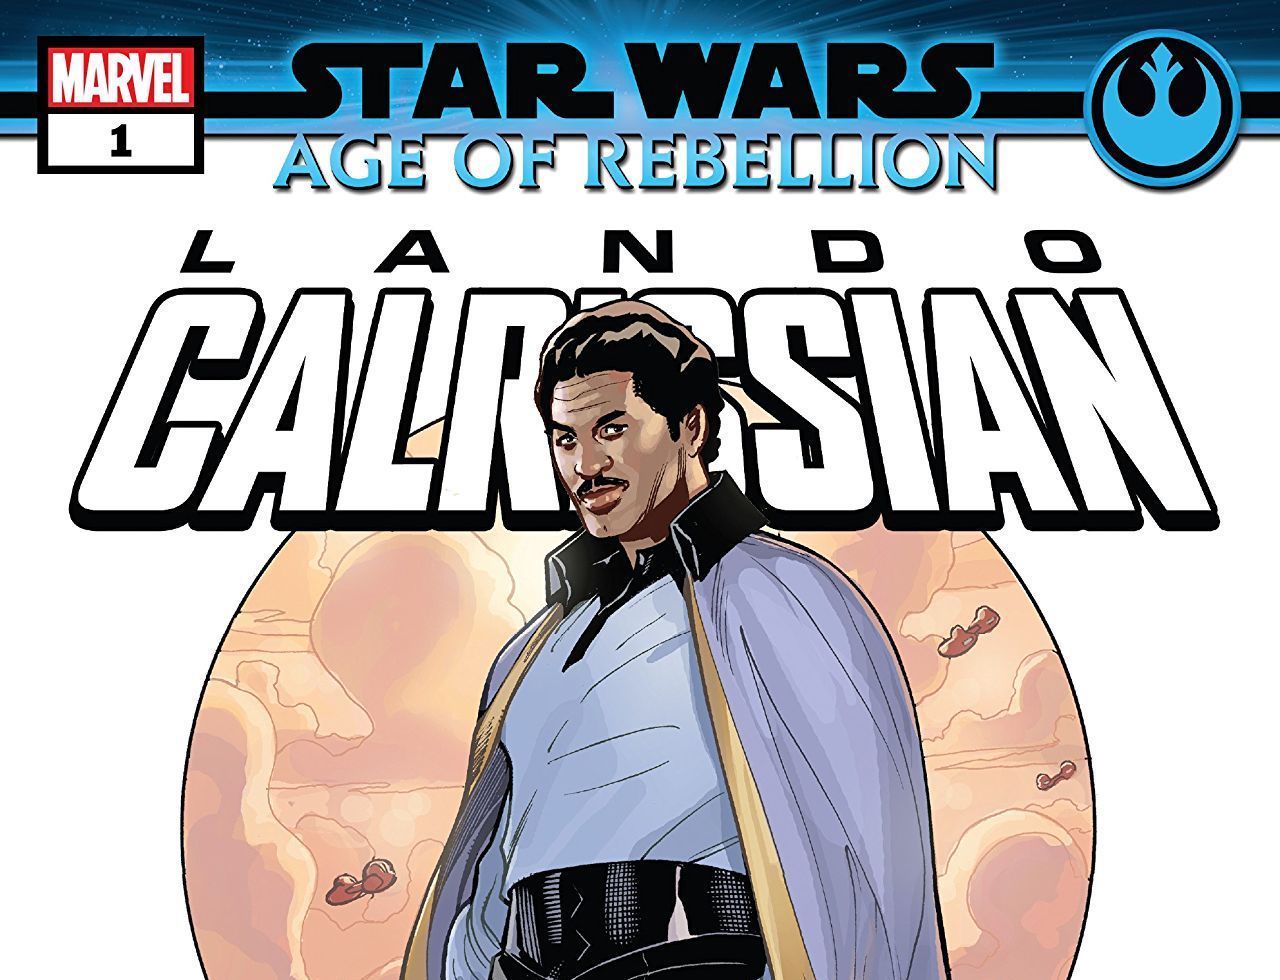 Star Wars: Age of Rebellion - Lando Calrissian #1 Review